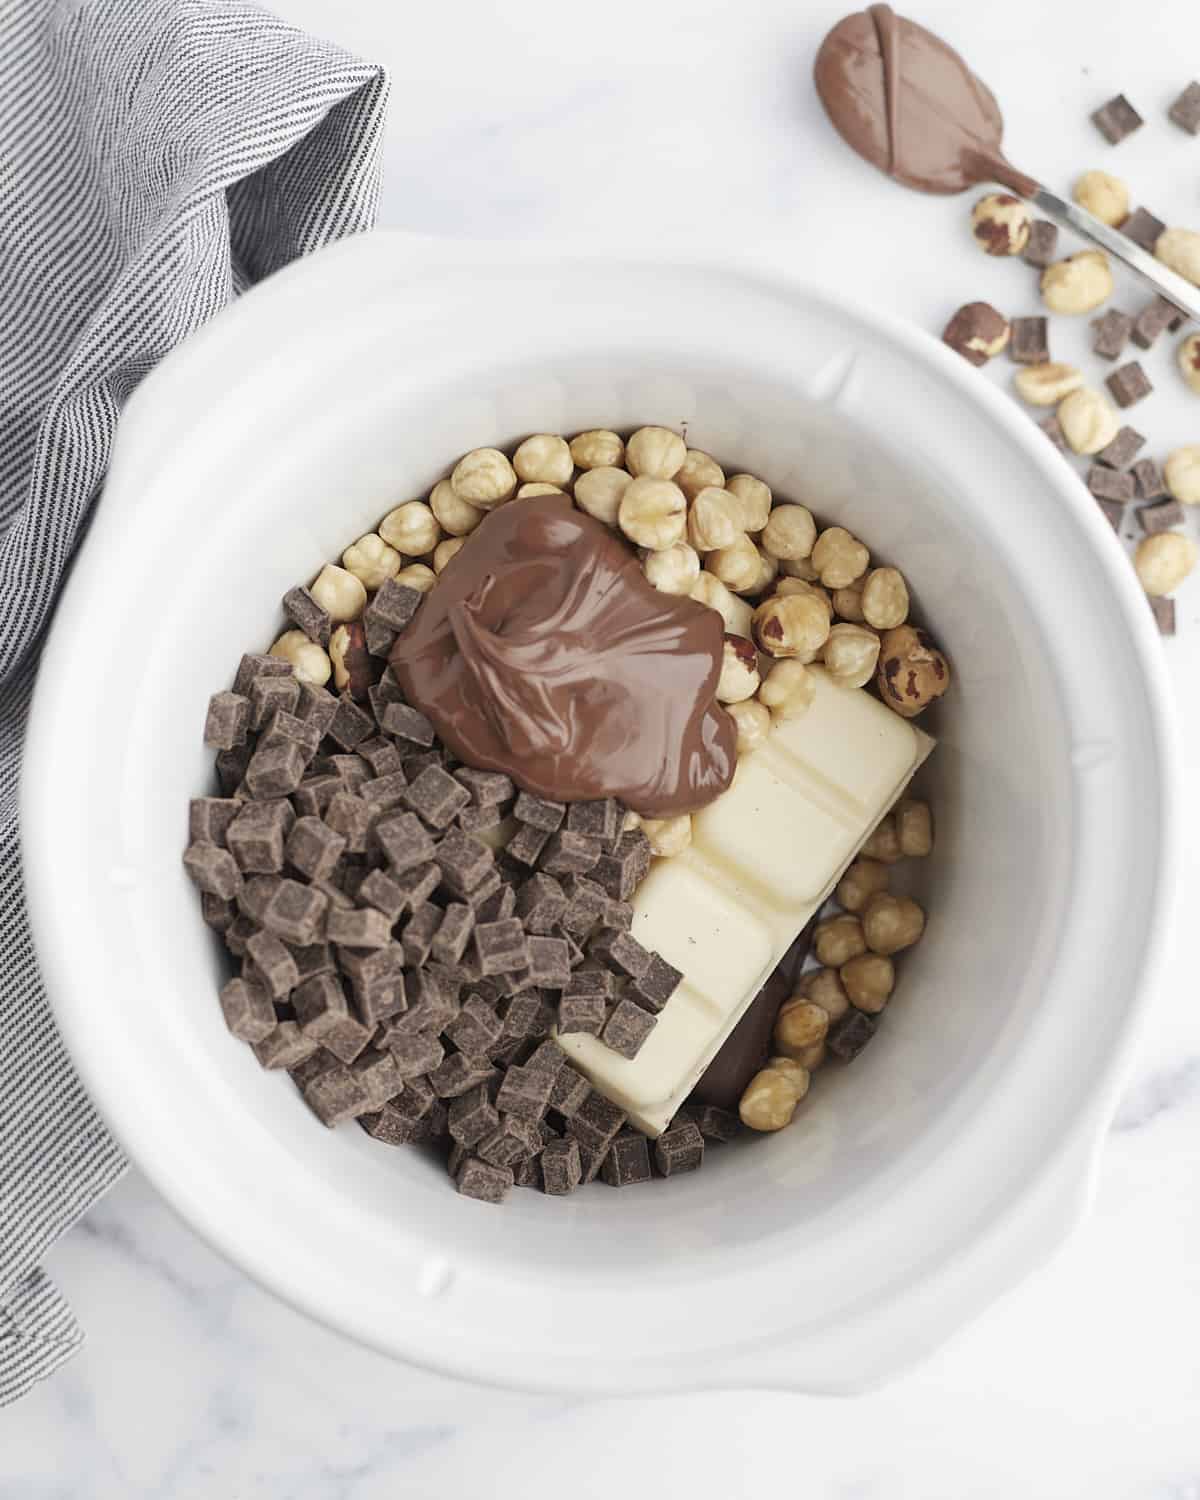 hazelnuts, white chocolate bark, dark chocolate chunks, and nutella in a crockpot